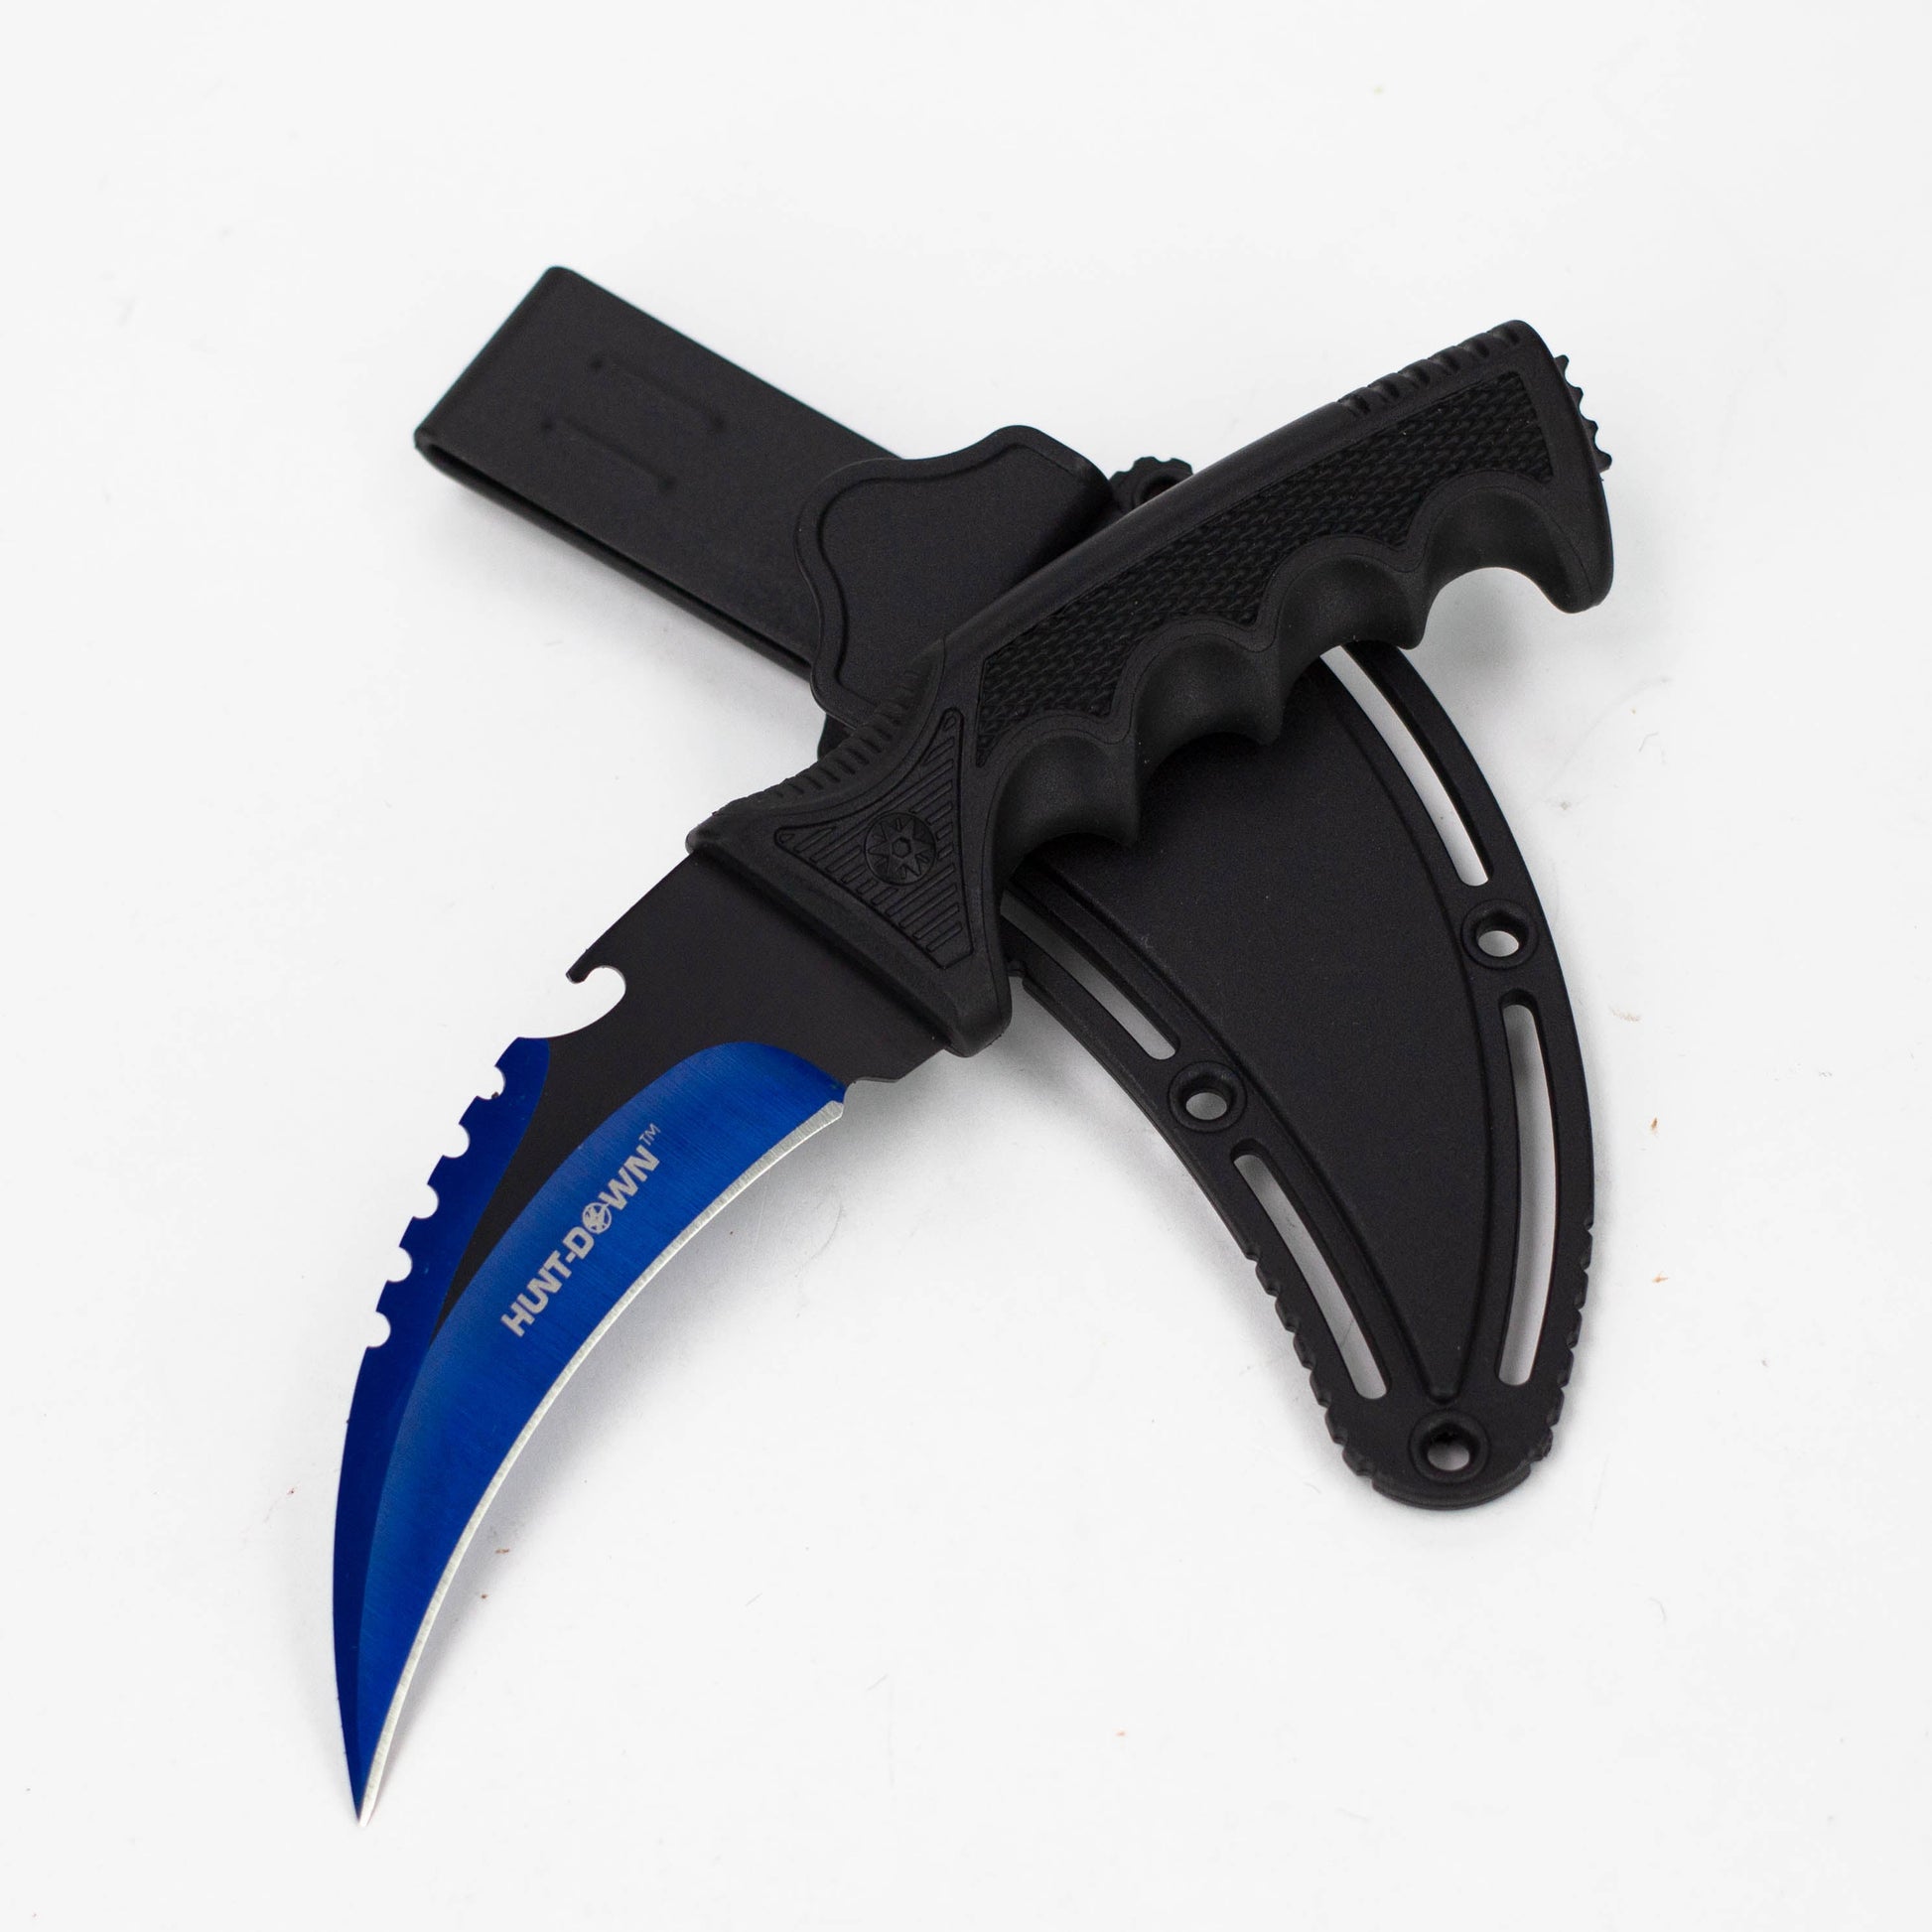 Defender-Xtreme 11" Black Hunting Knife with Sheath []1382X]_2